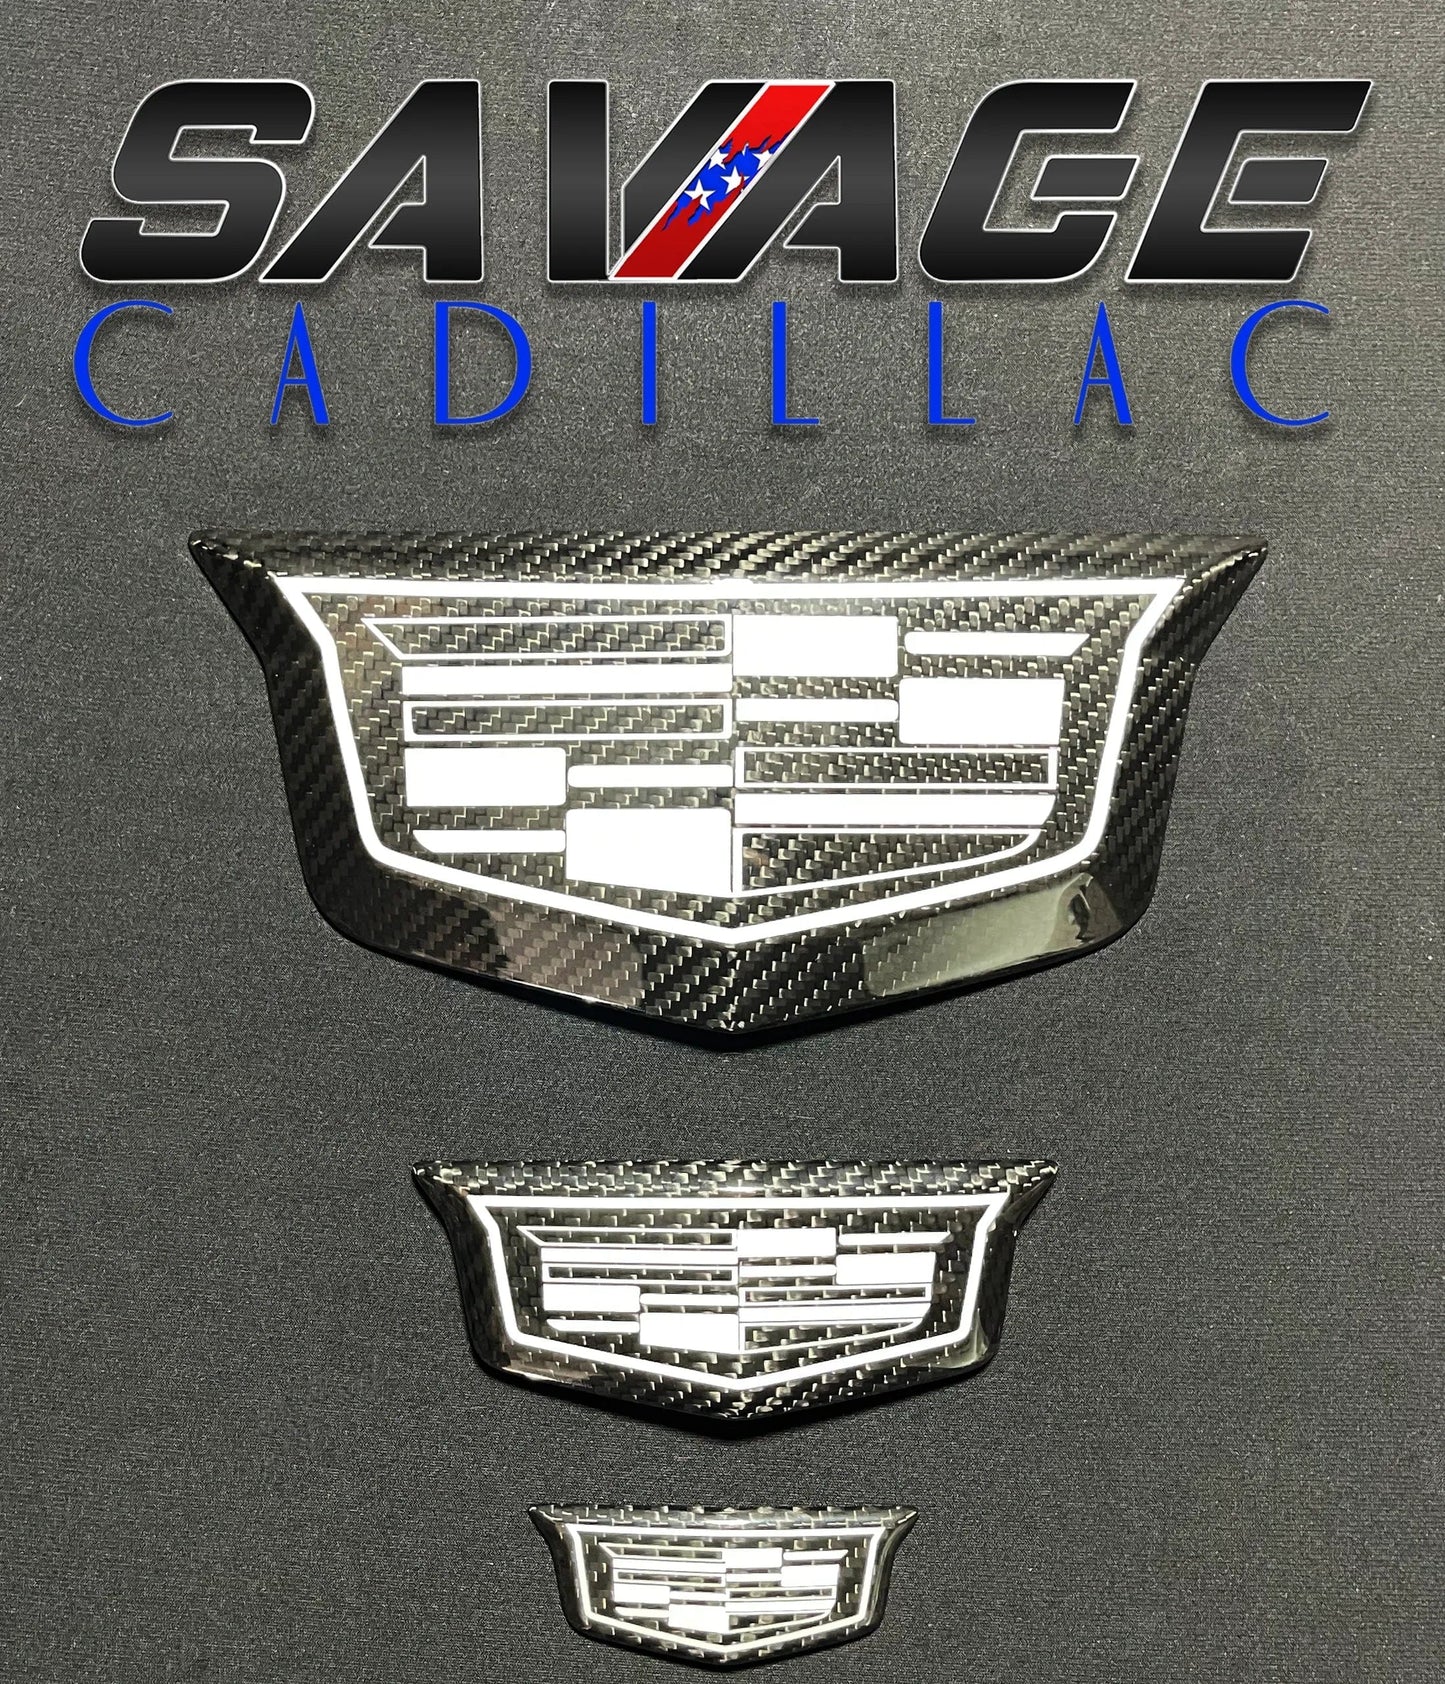 Cadillac CT4-V Front Grille, Rear Trunk & Steering Wheel Genuine Carbon Fiber Emblem Covers